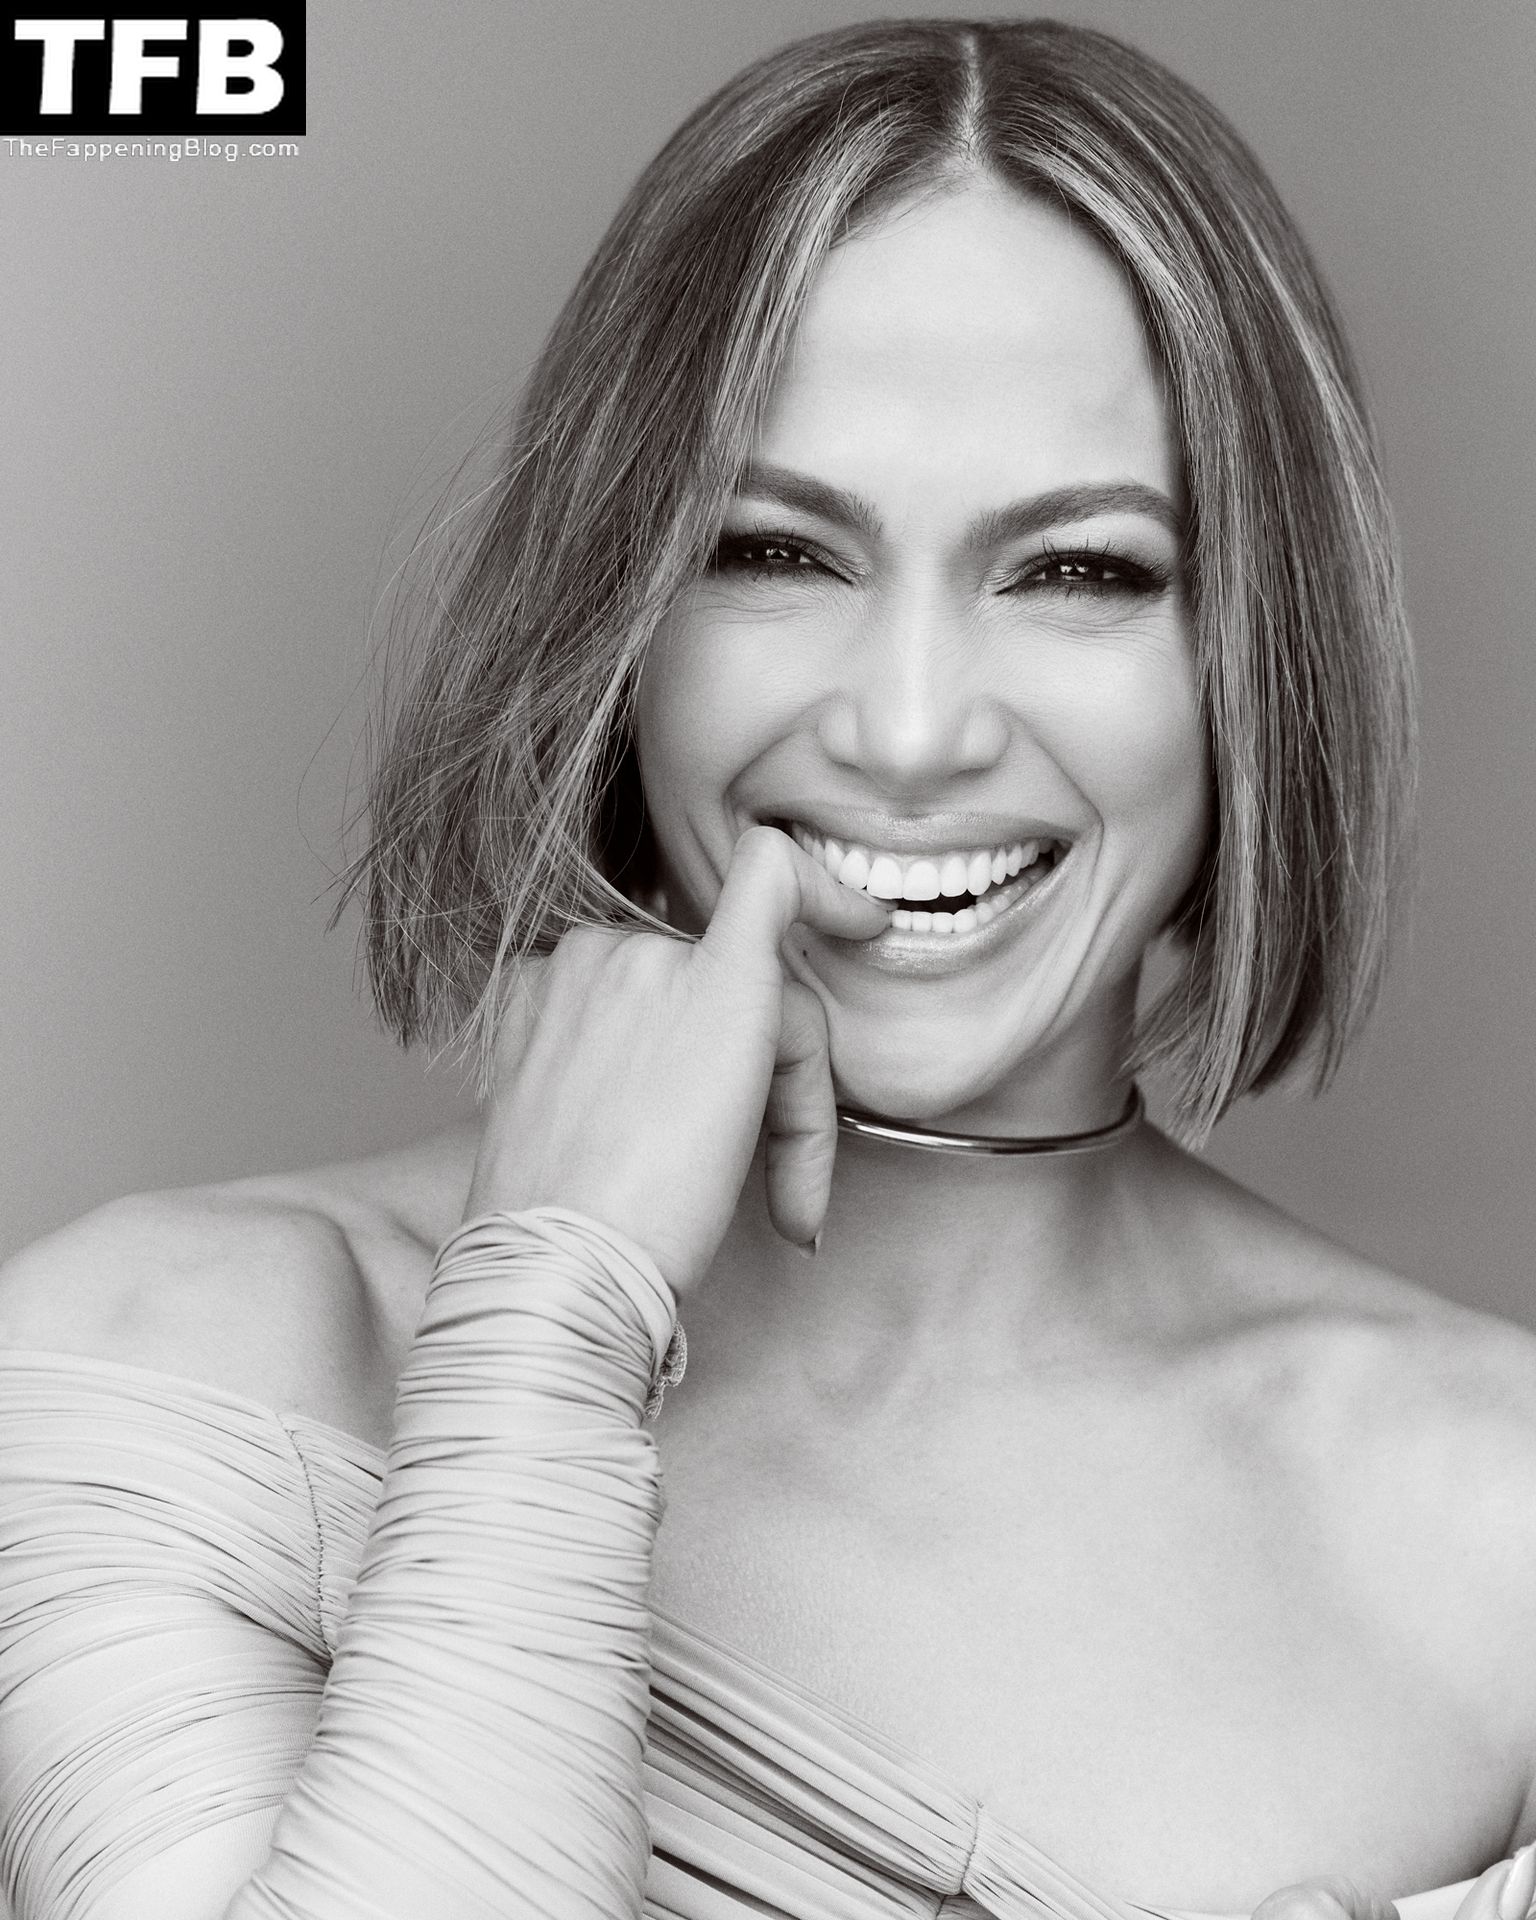 Jennifer-Lopez-Sexy-Rolling-Stone-The-Fappening-Blog-1.jpg